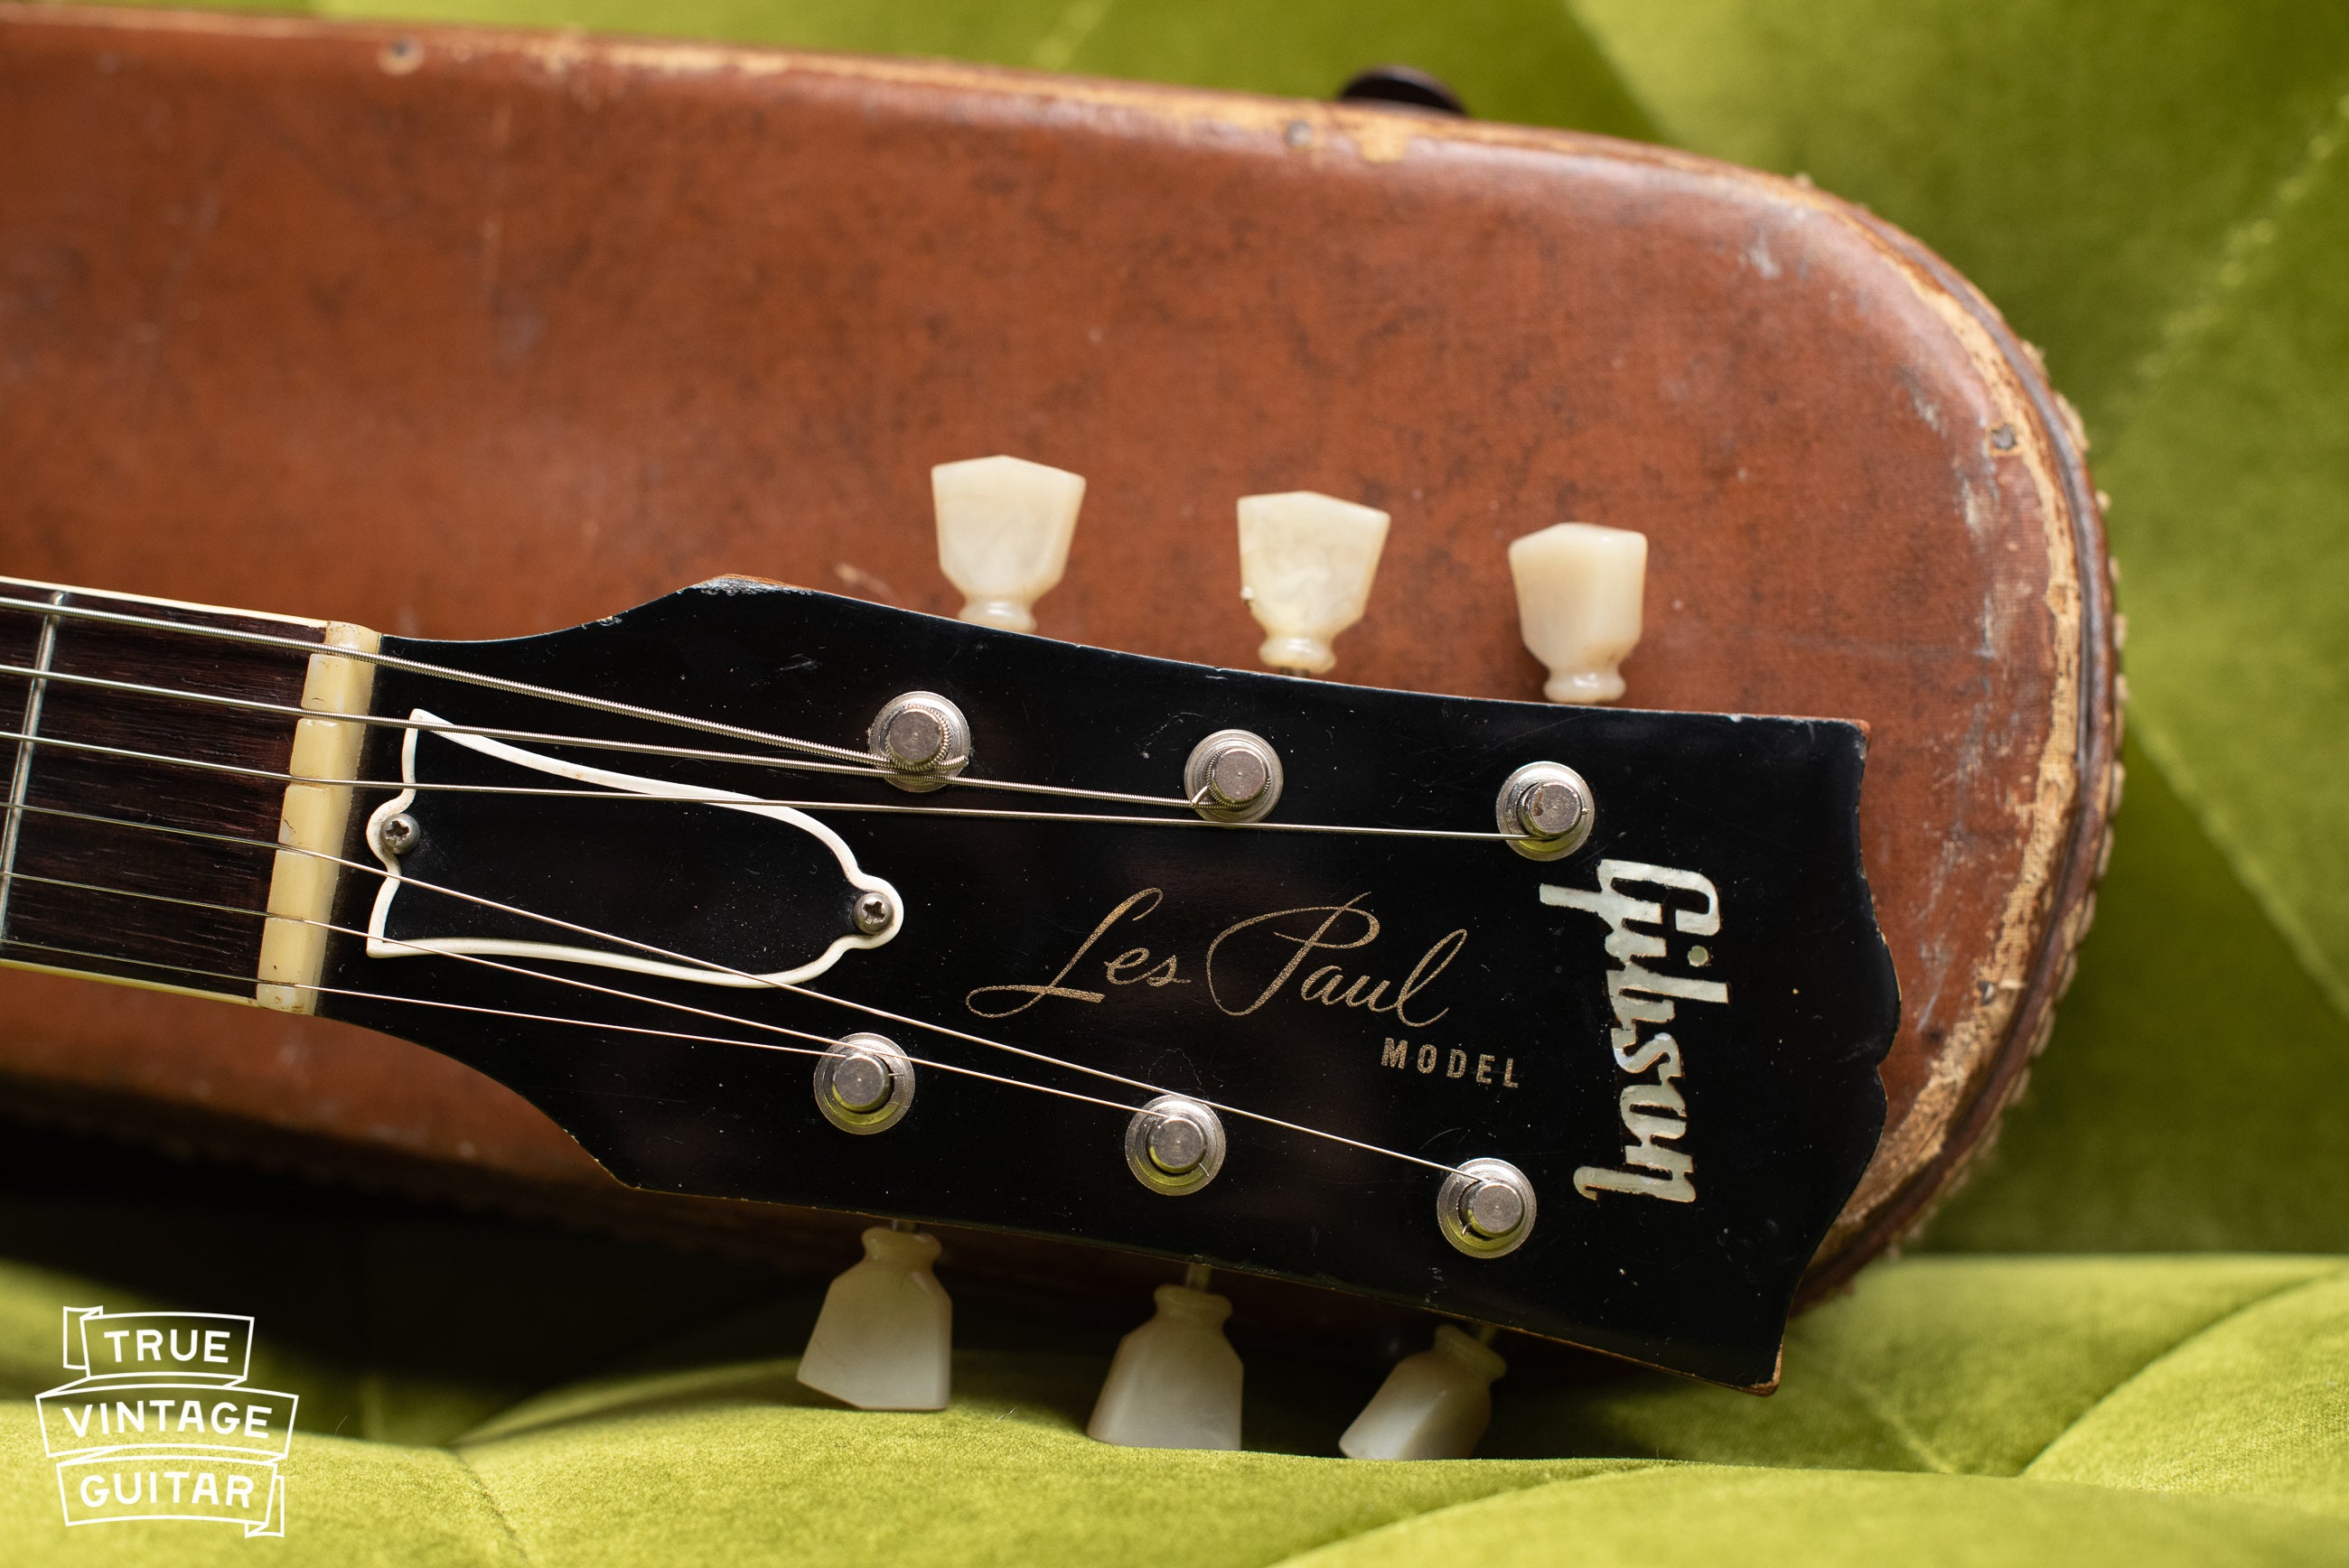 Vintage 1955 Gibson Les Paul Model Goldtop electric guitar headstock